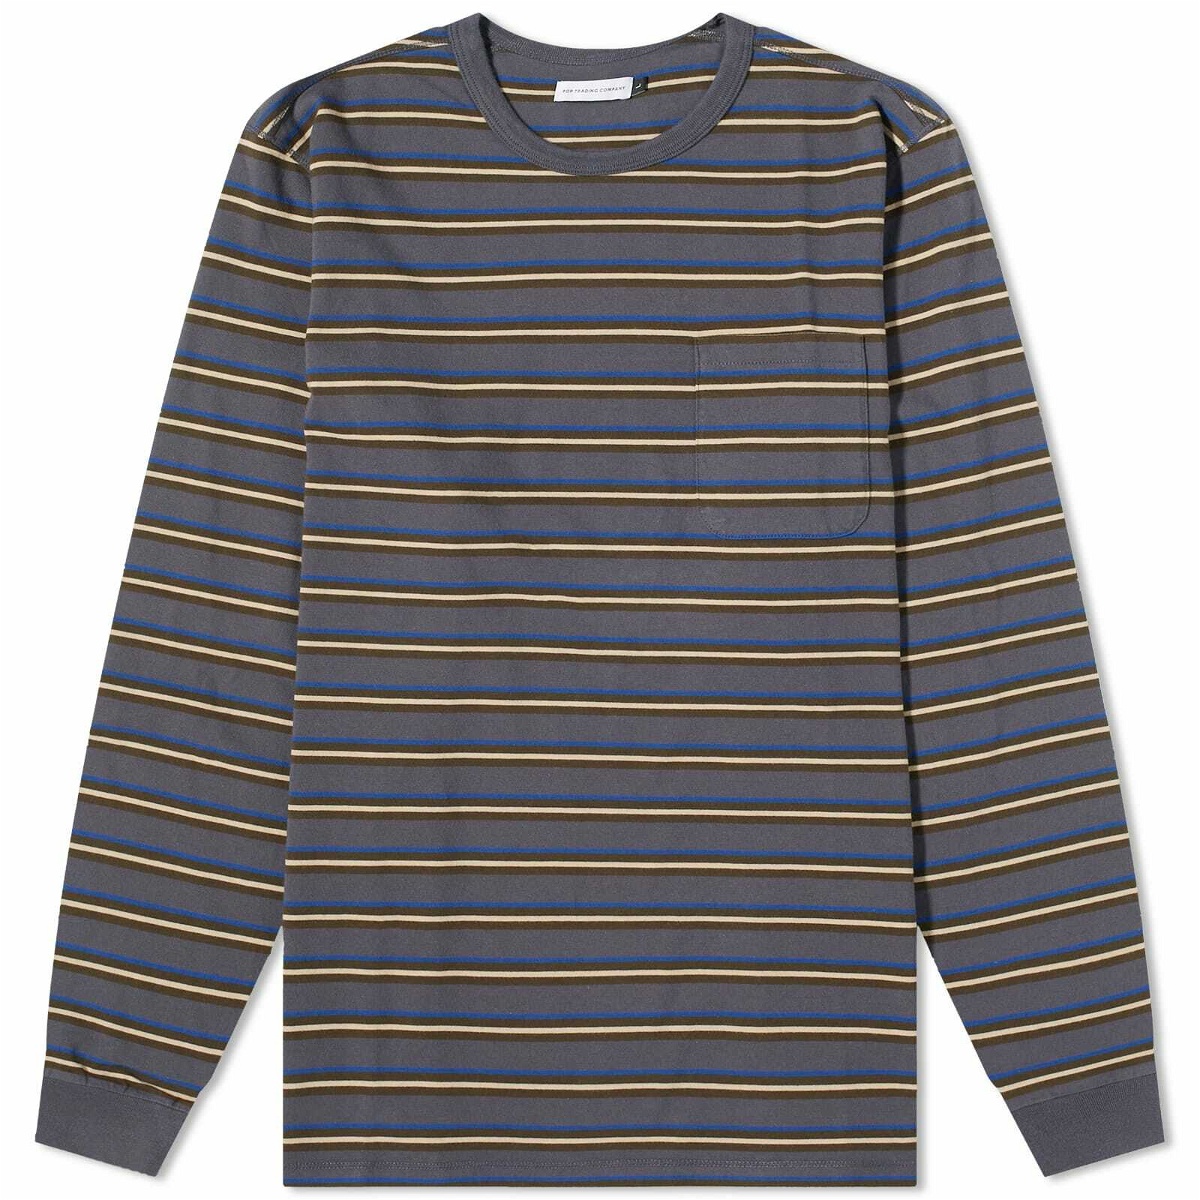 Photo: Pop Trading Company Men's Long Sleeve Stripe T-Shirt in Charcoal